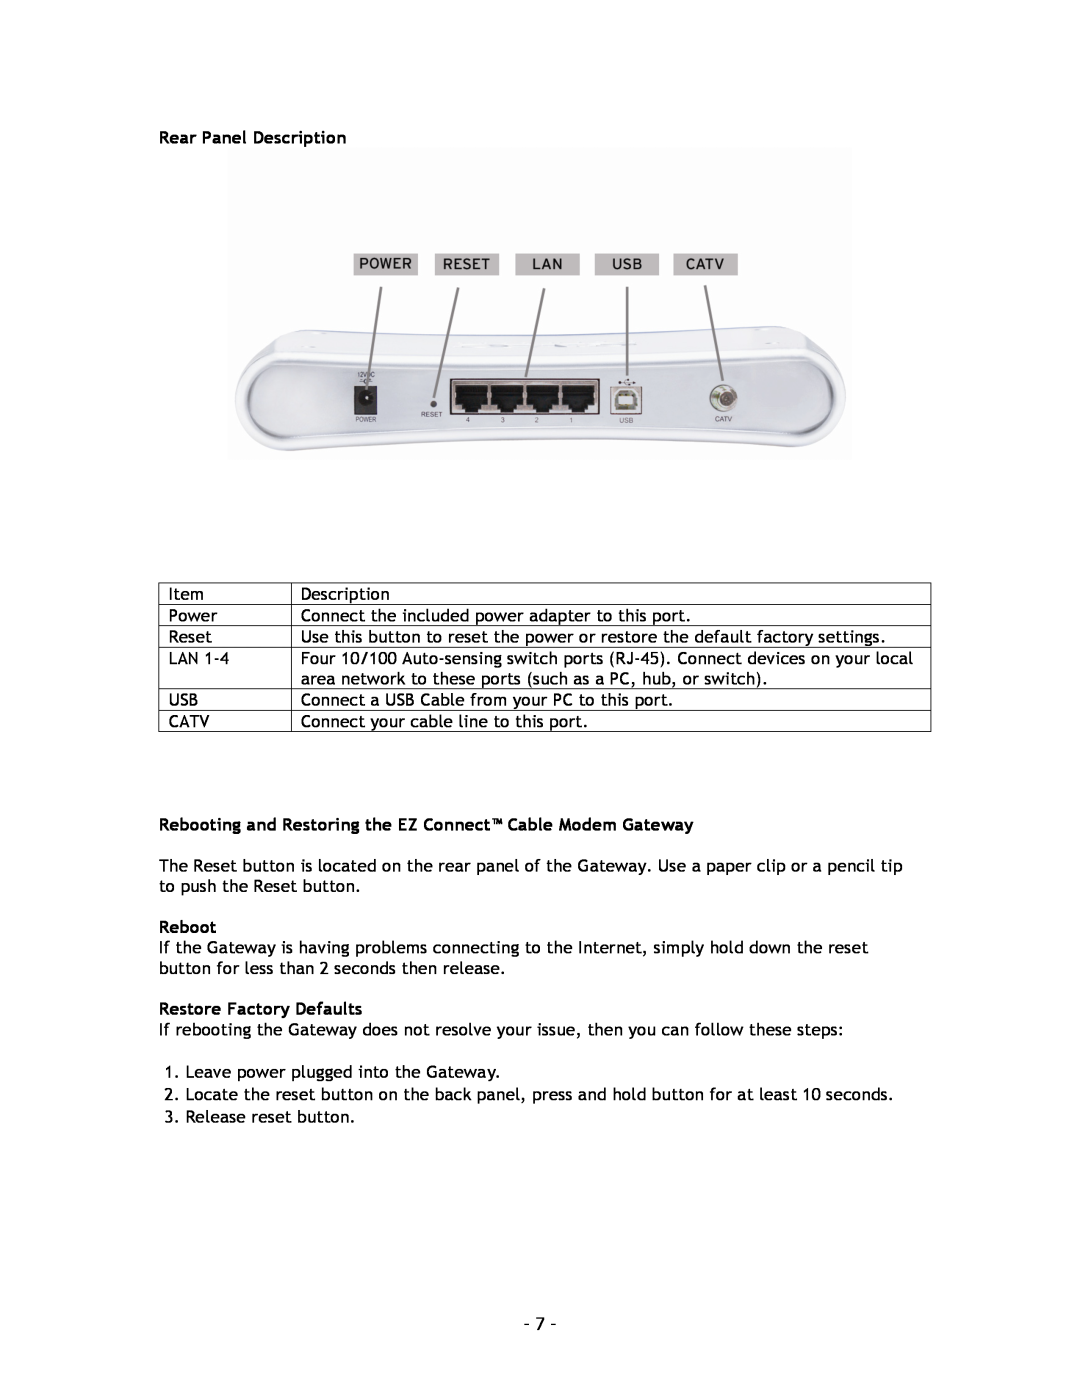 SMC Networks SMC8014 manual Rear Panel Description, Rebooting and Restoring the EZ Connect Cable Modem Gateway 